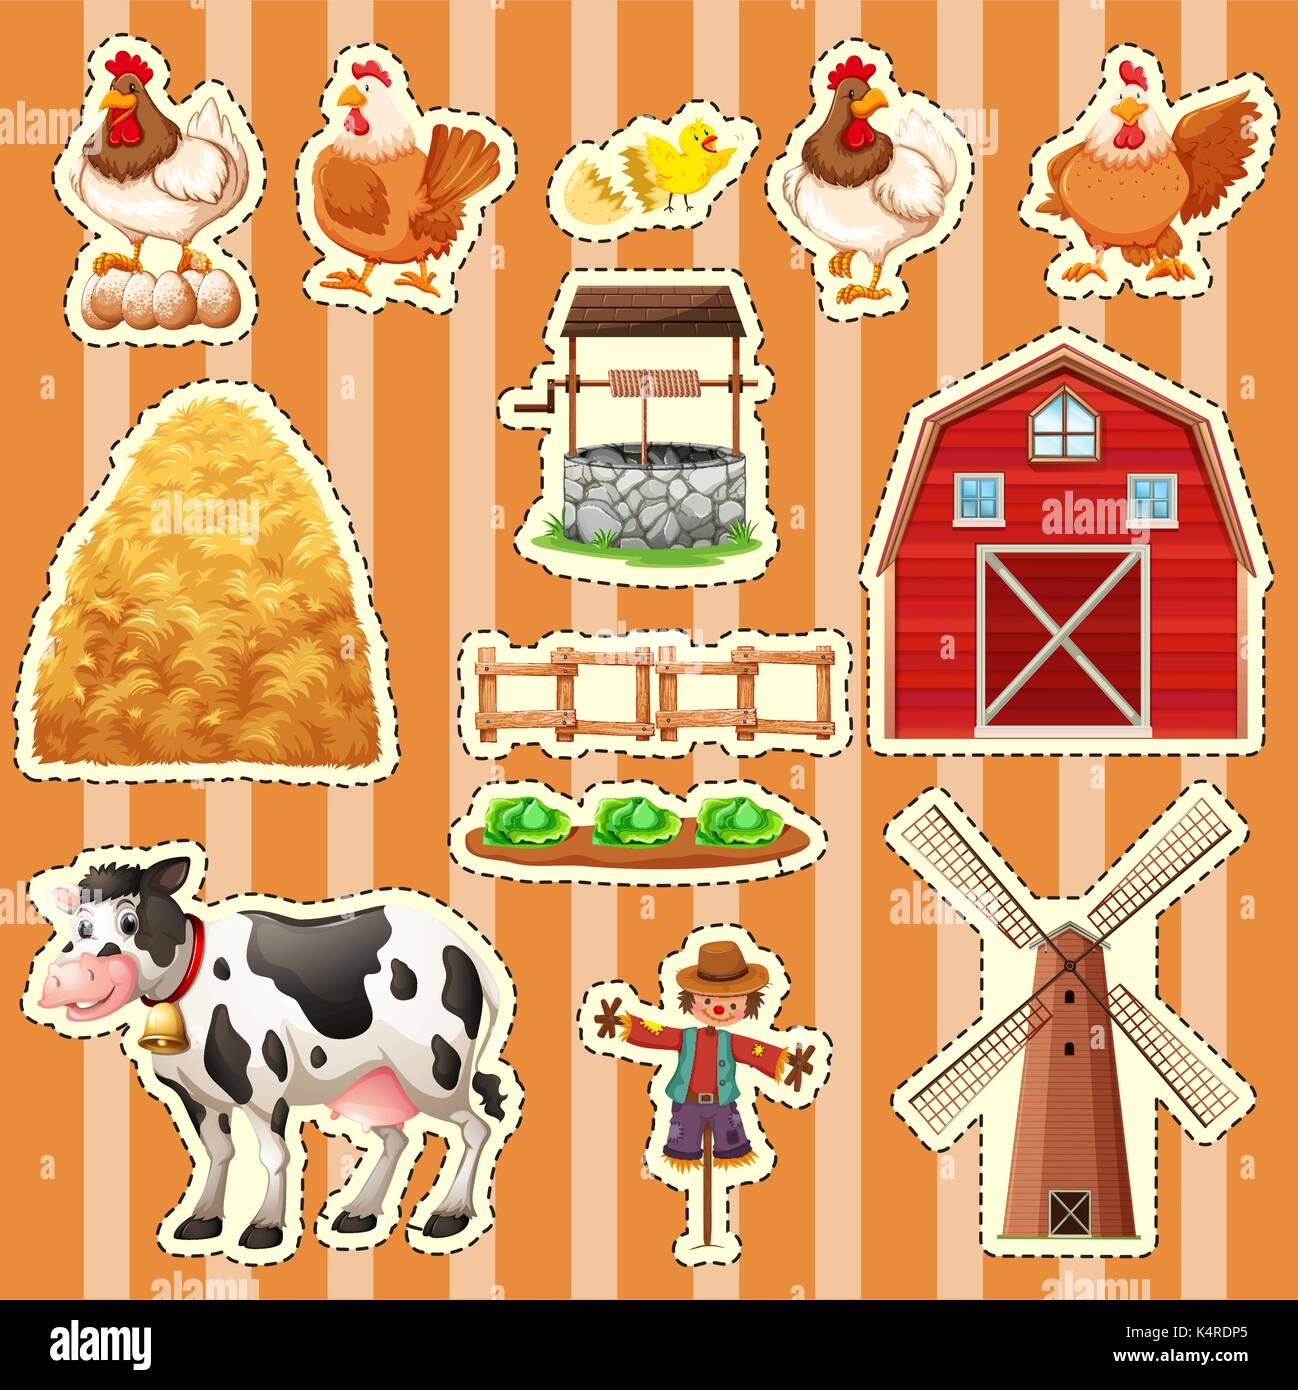 Sticker design for farm animals illustration Stock Vector